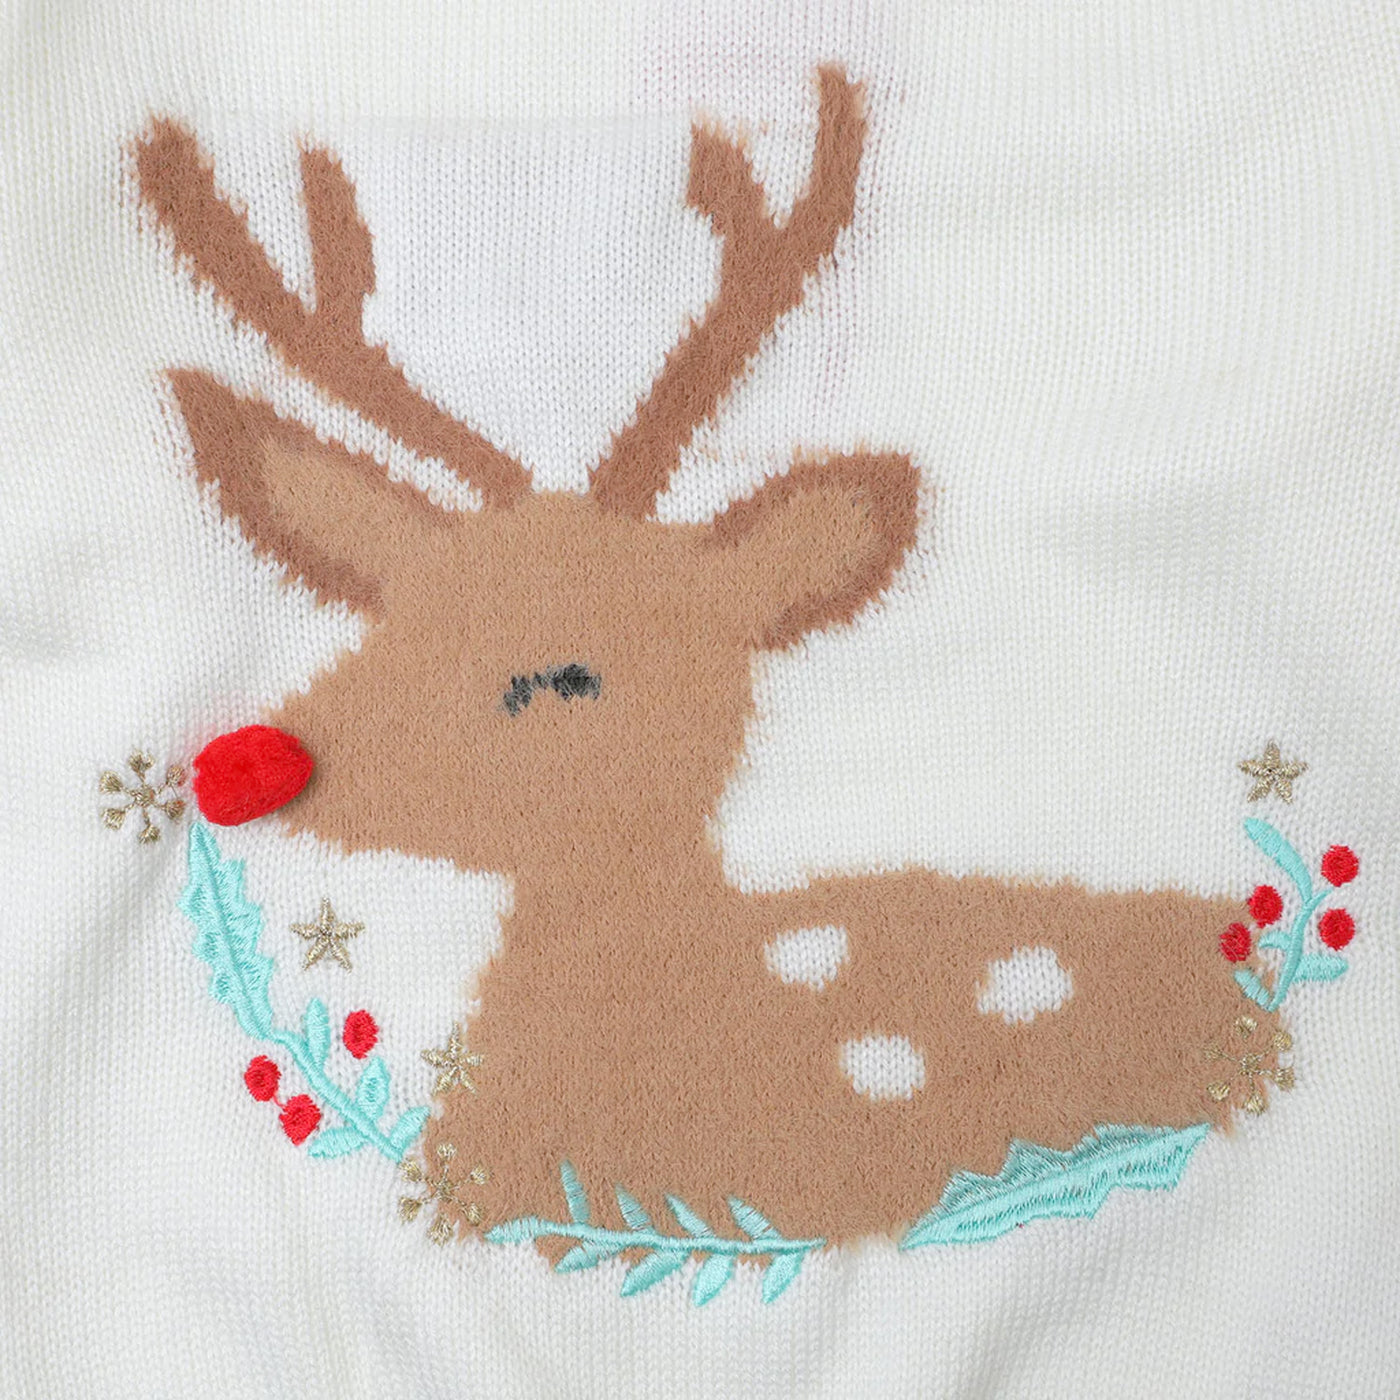 Girls Sweater Reindeer - White